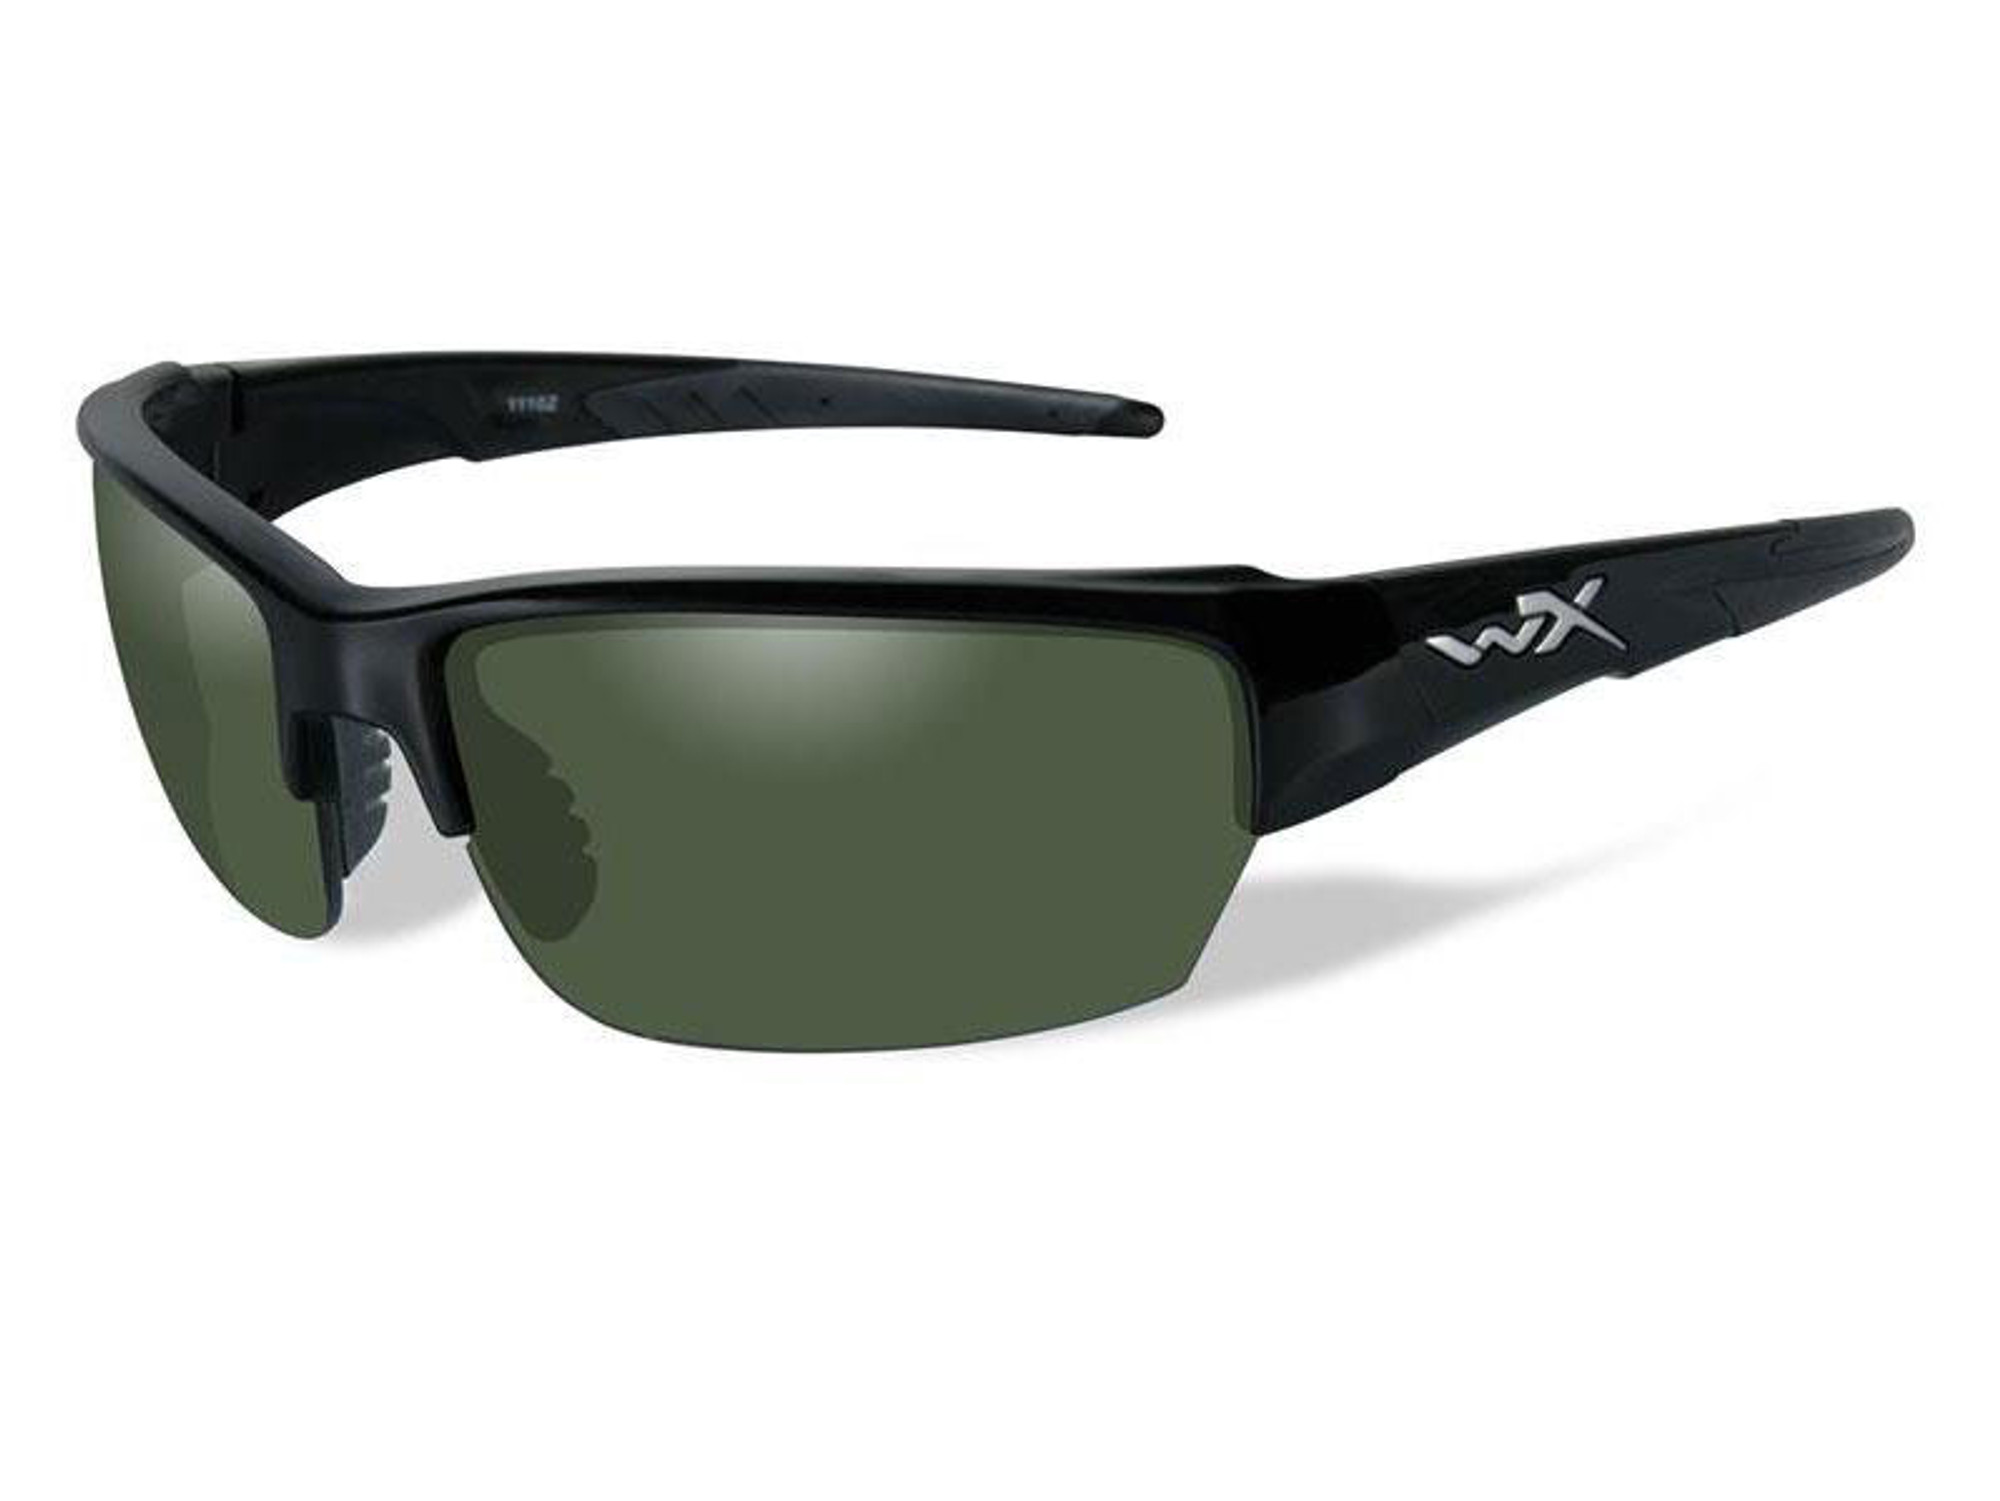 Wiley X Saint Sunglasses (Color: Polarized Smoke Green lens with Gloss Black frame)